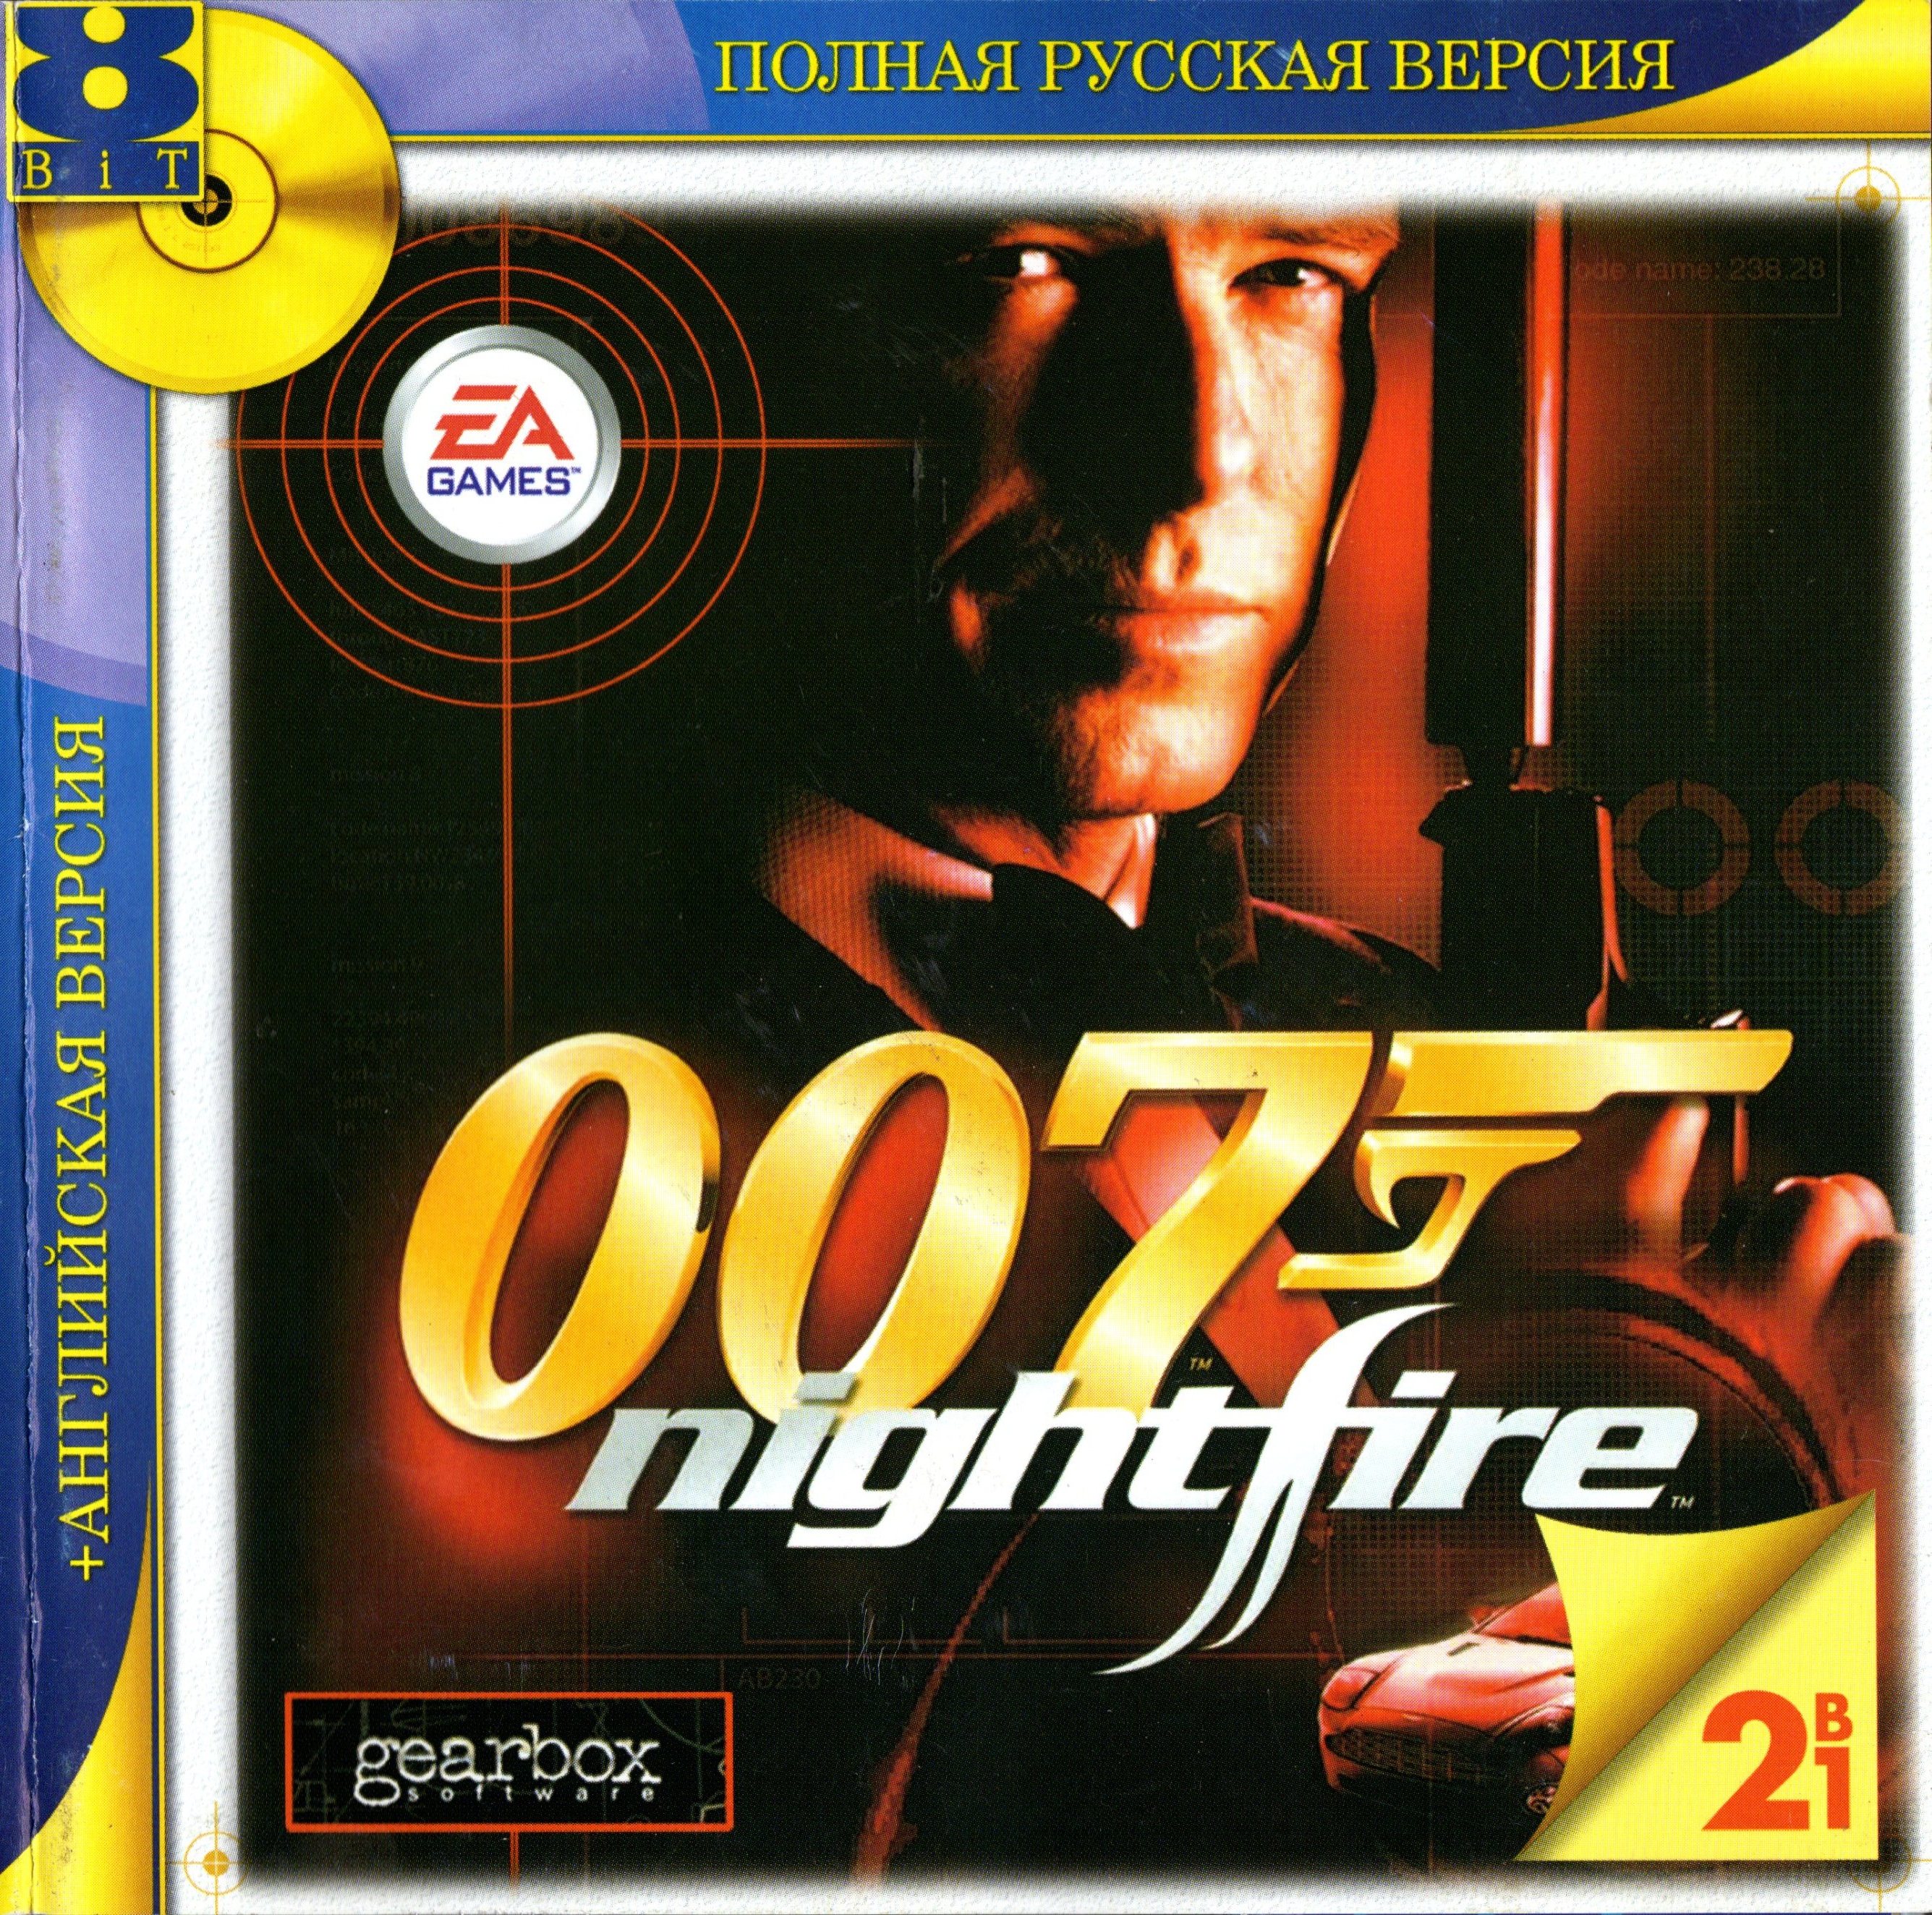 James bond 007 nightfire steam фото 56